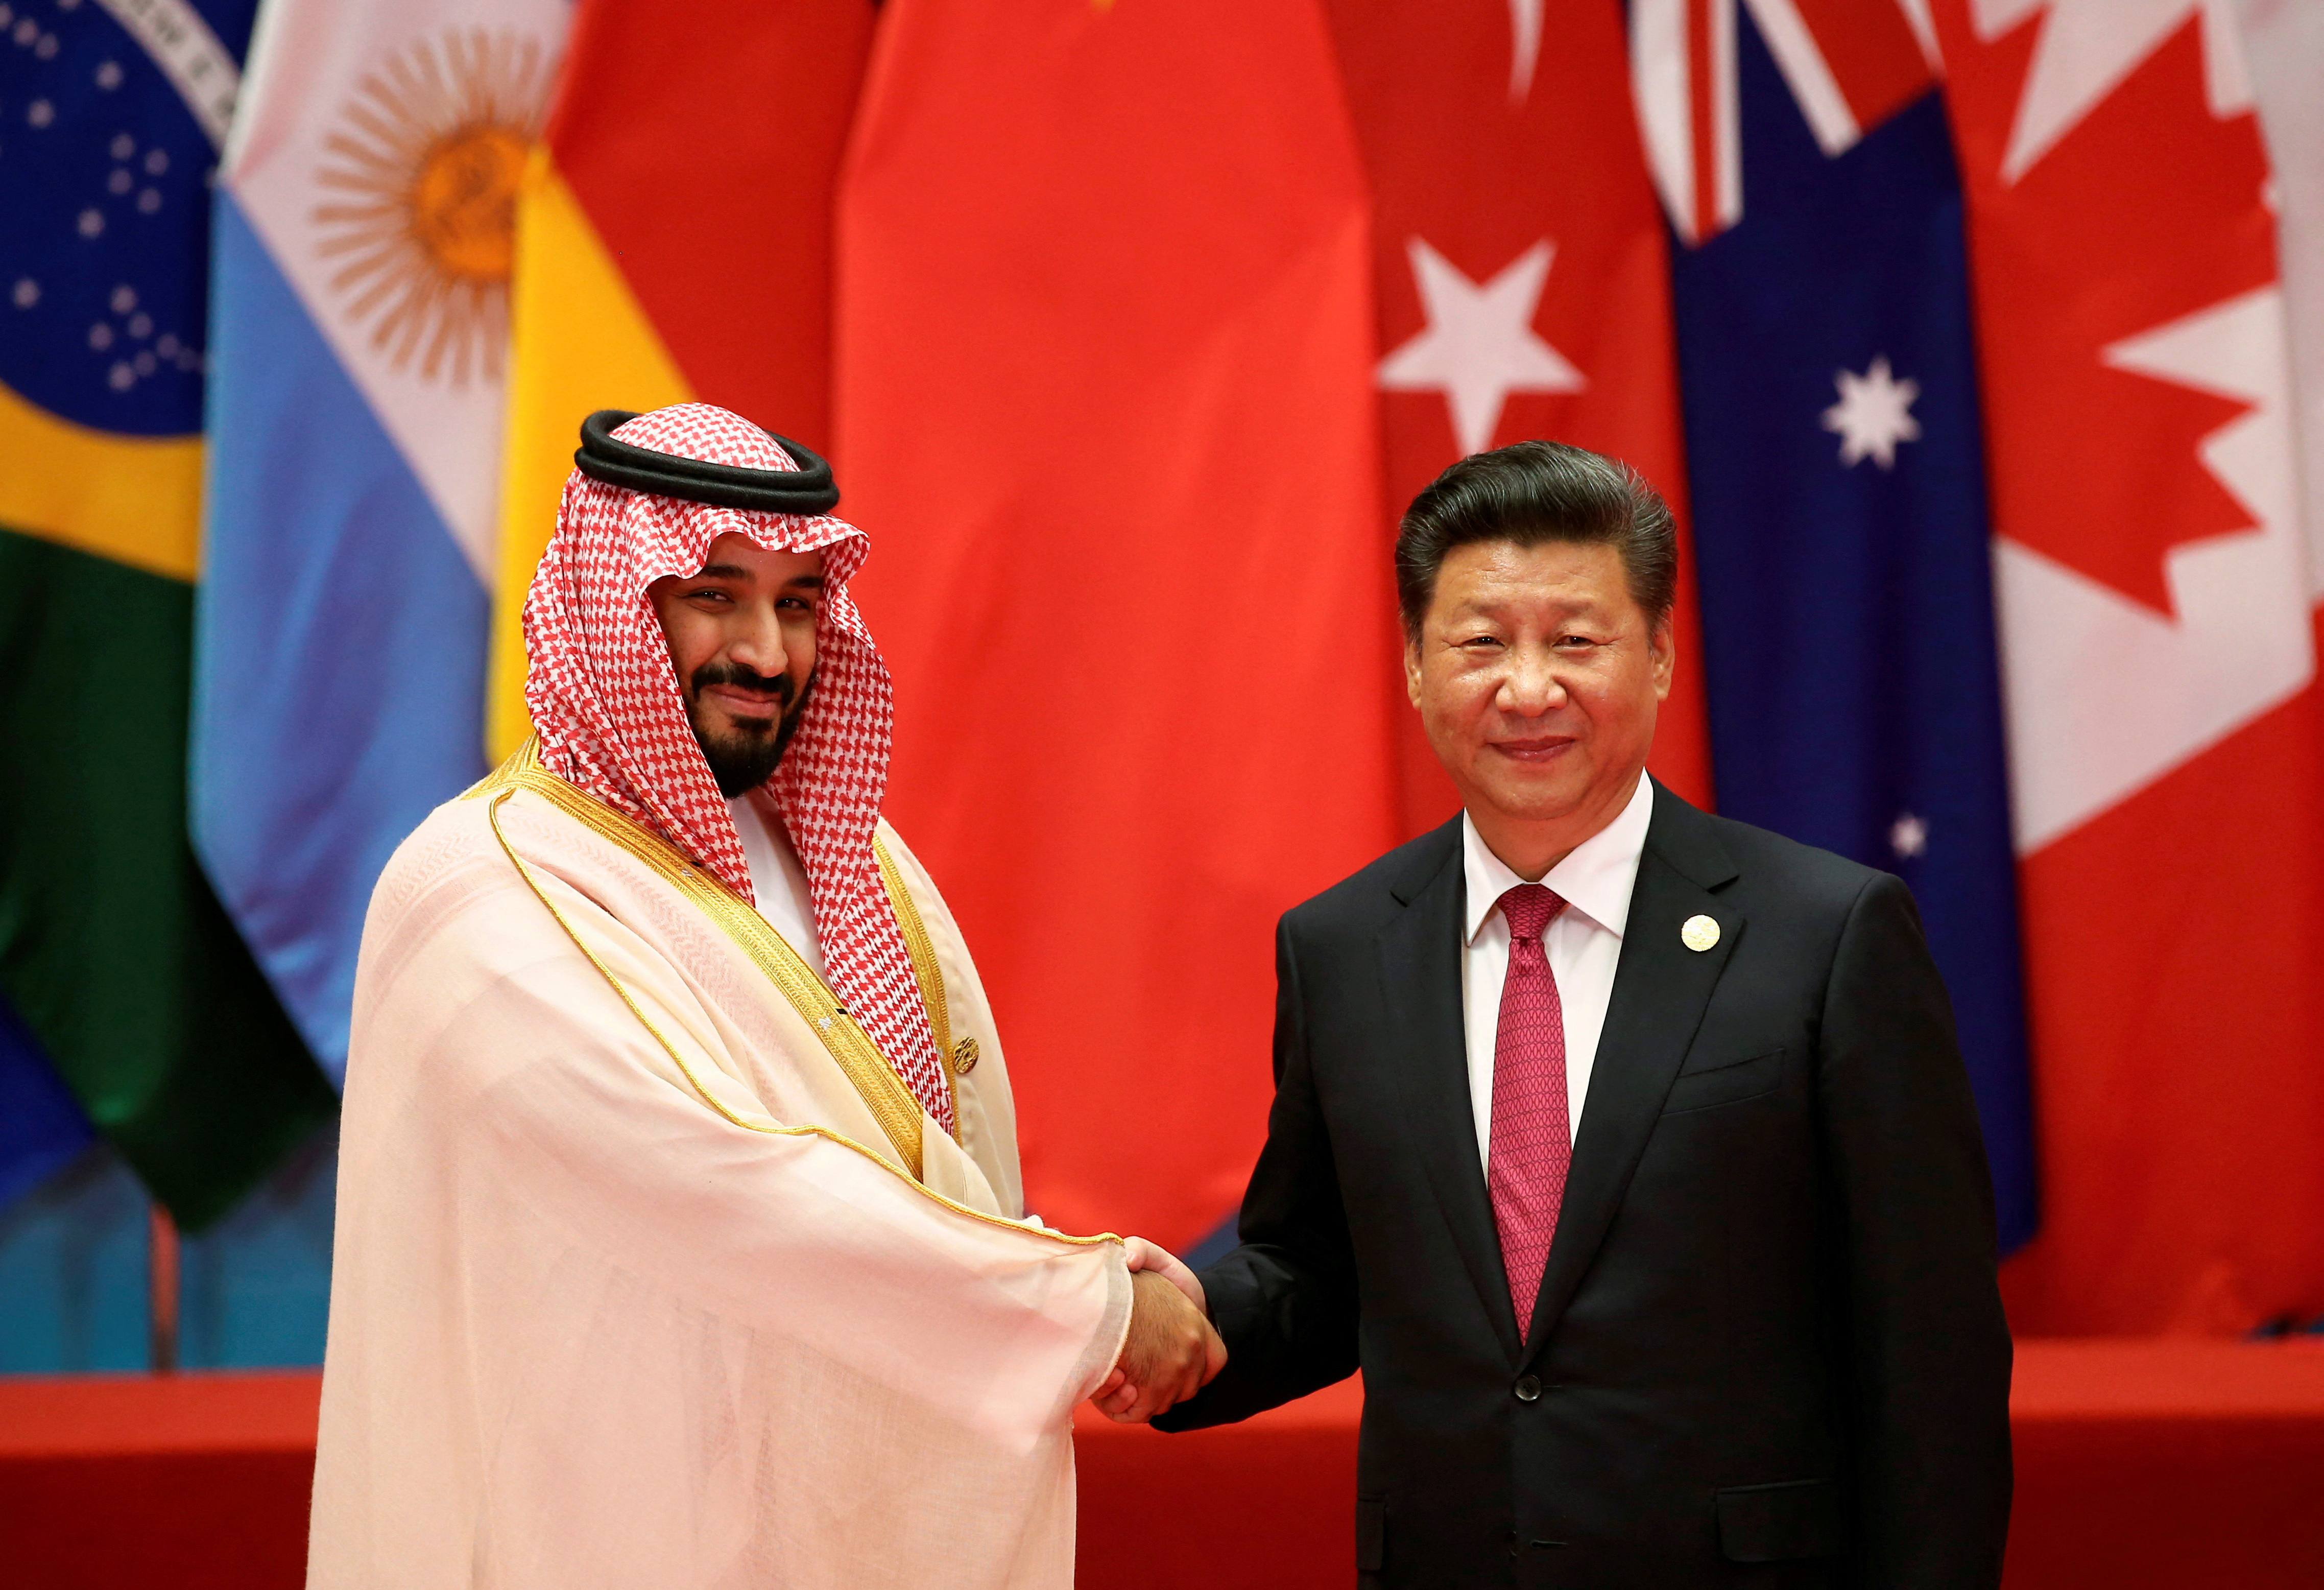 Chinese President Xi Jinping shakes hands with Saudi Arabia's Deputy Crown Prince Mohammed bin Salman during the G20 Summit in Hangzhou